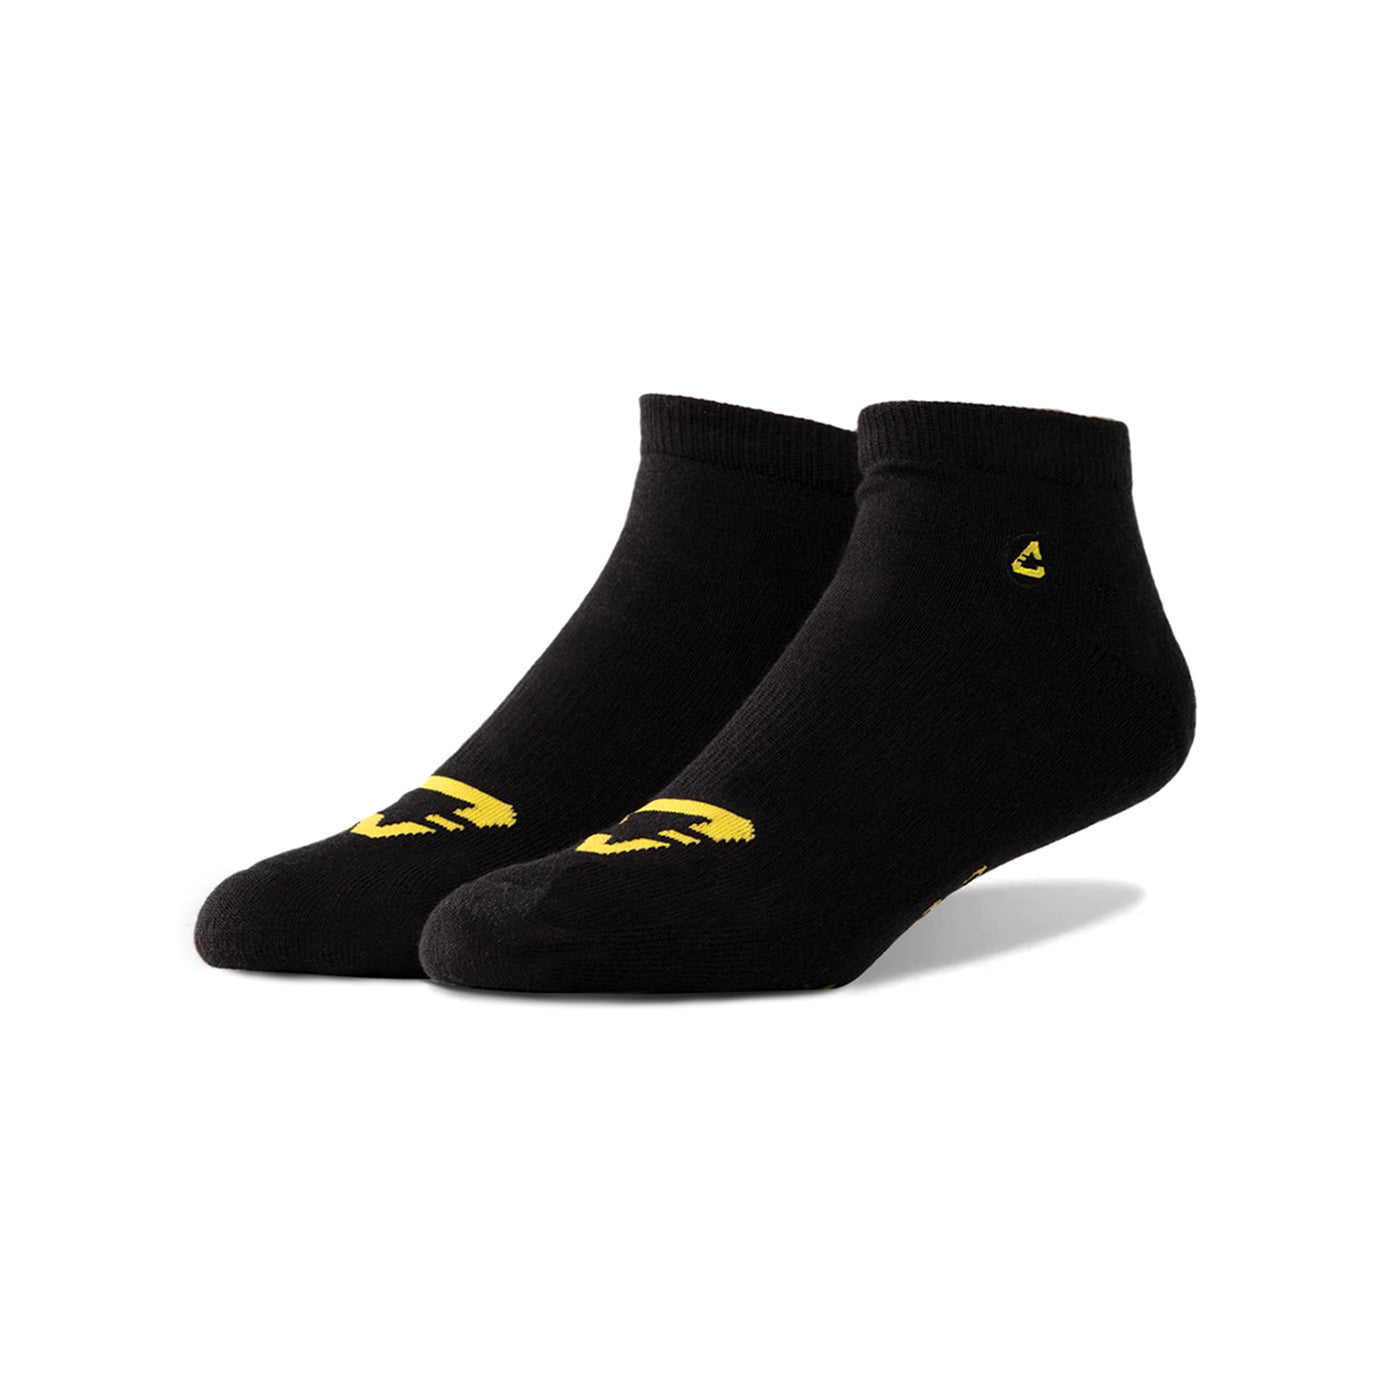 cuater-golf-friendly-scrimmage-crew-socks-4mt019-black